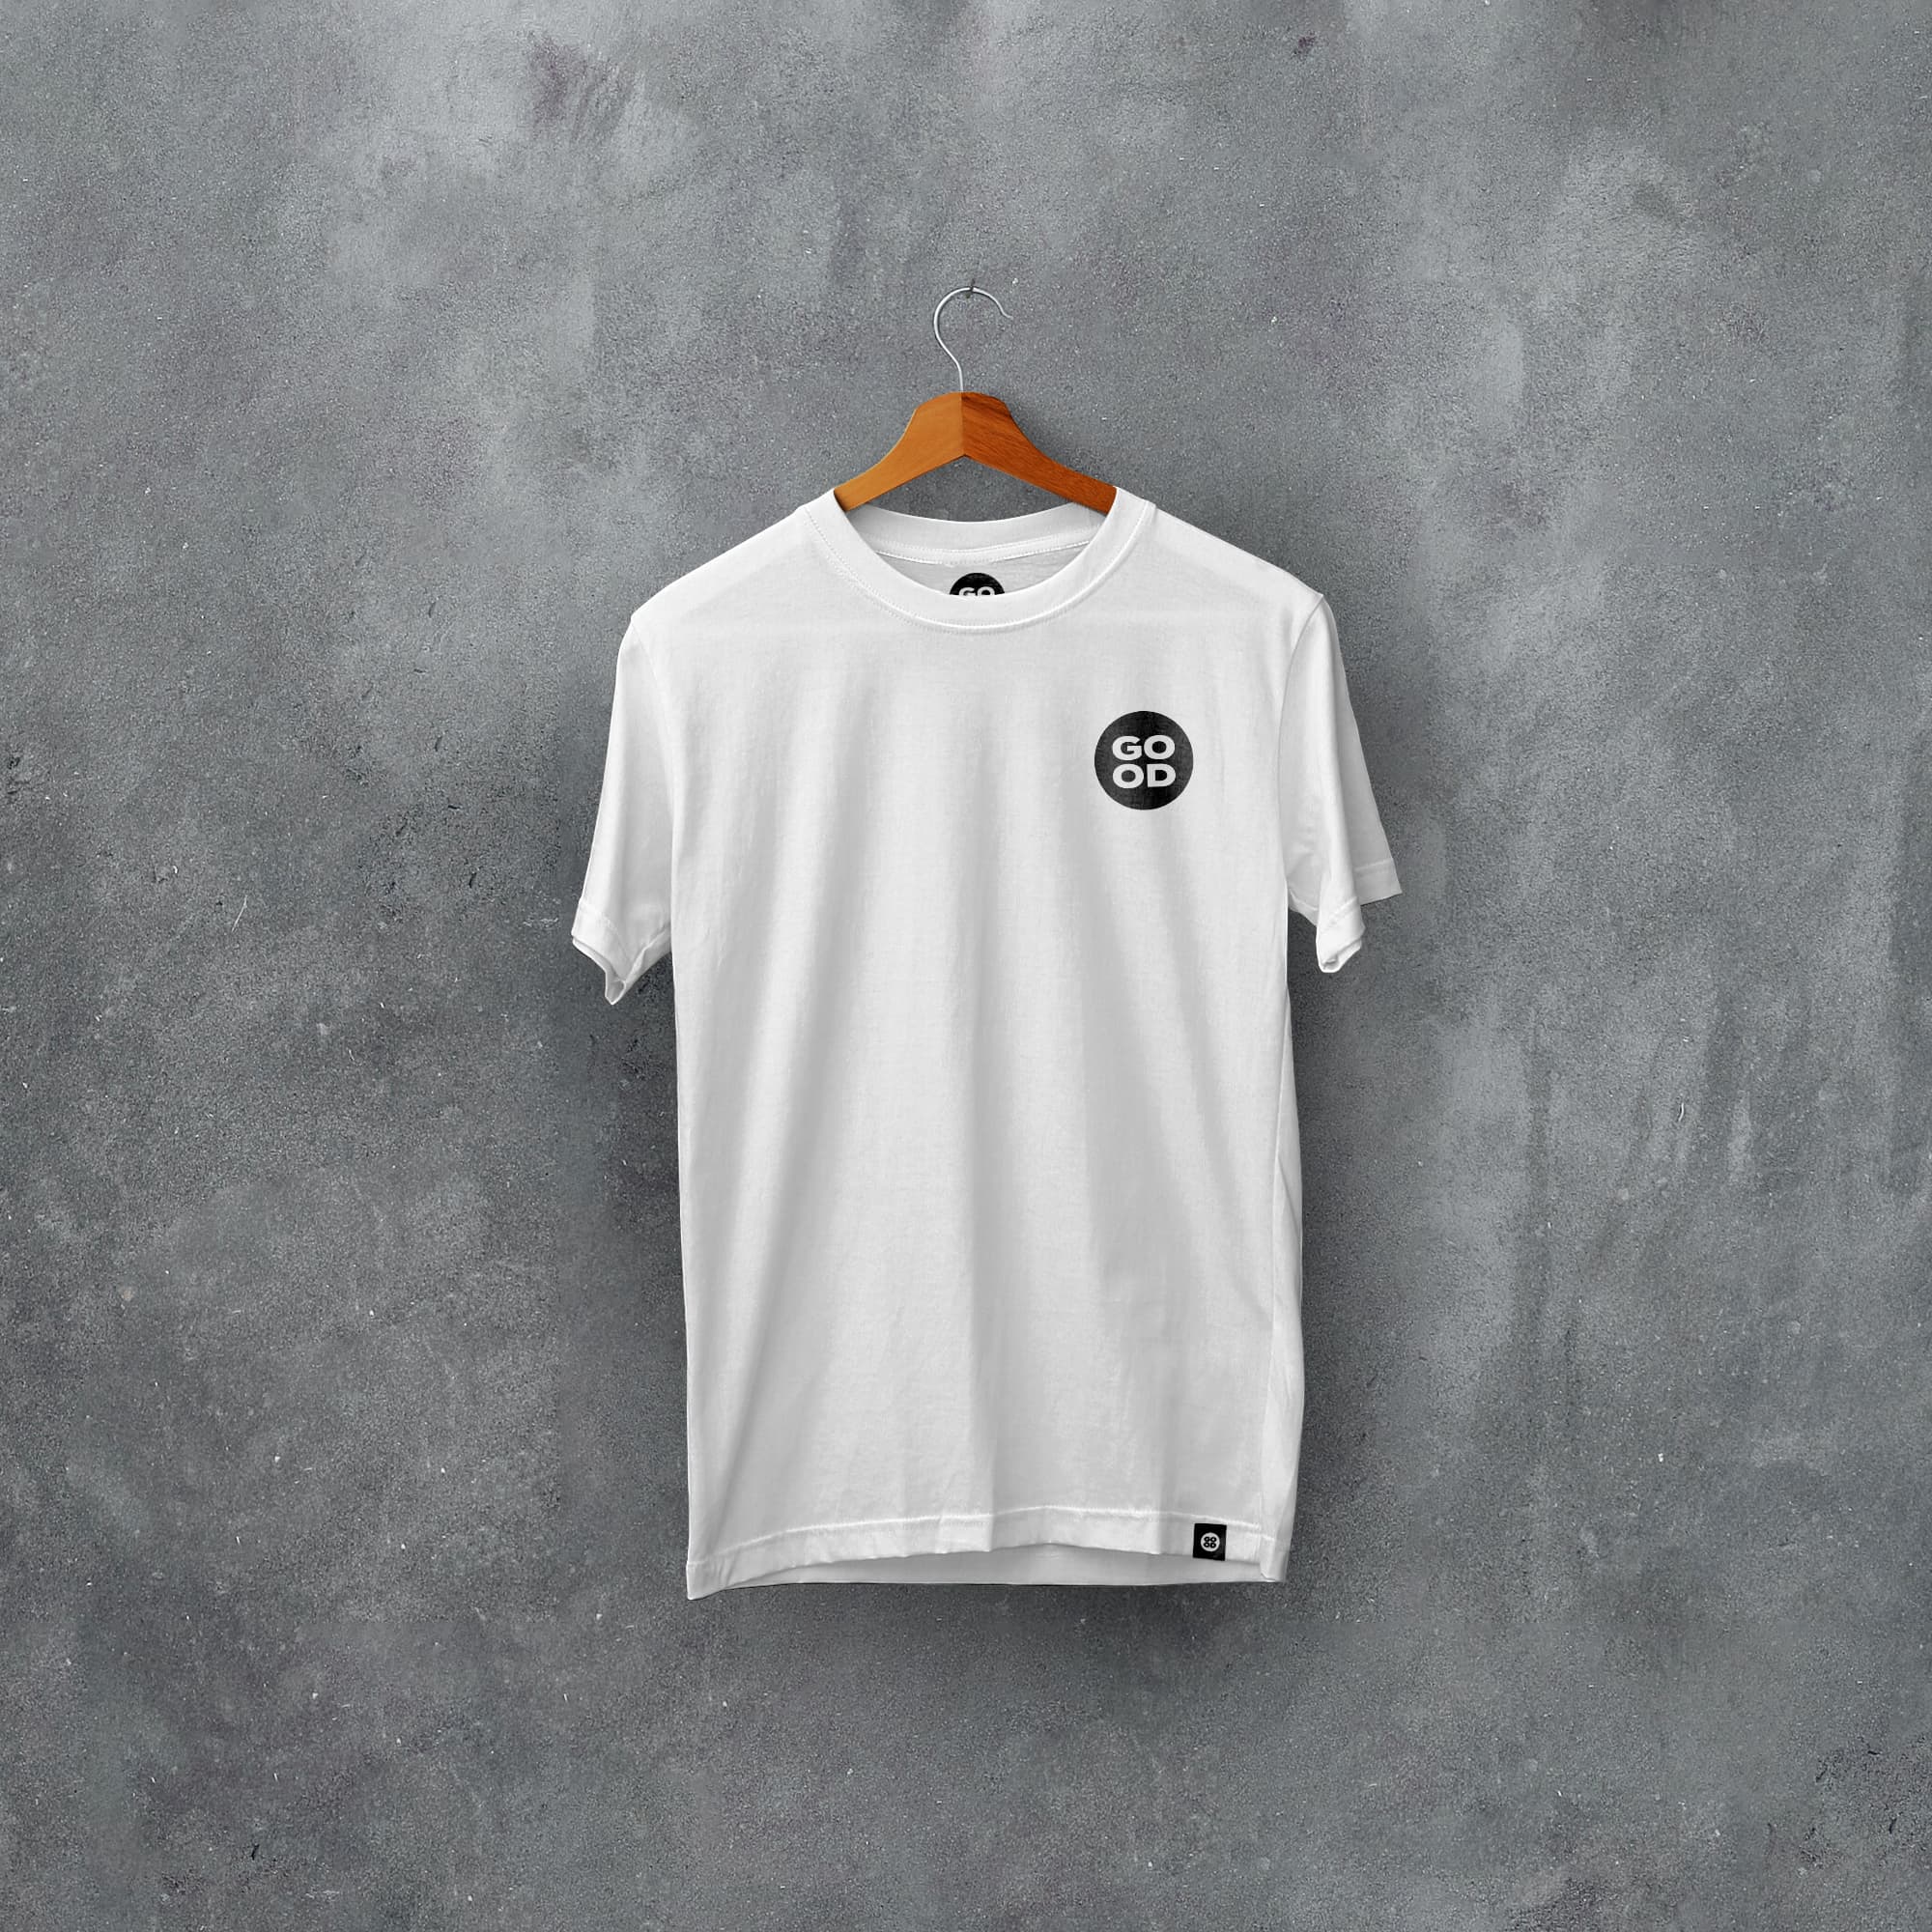 York Classic Kits Football T-Shirt